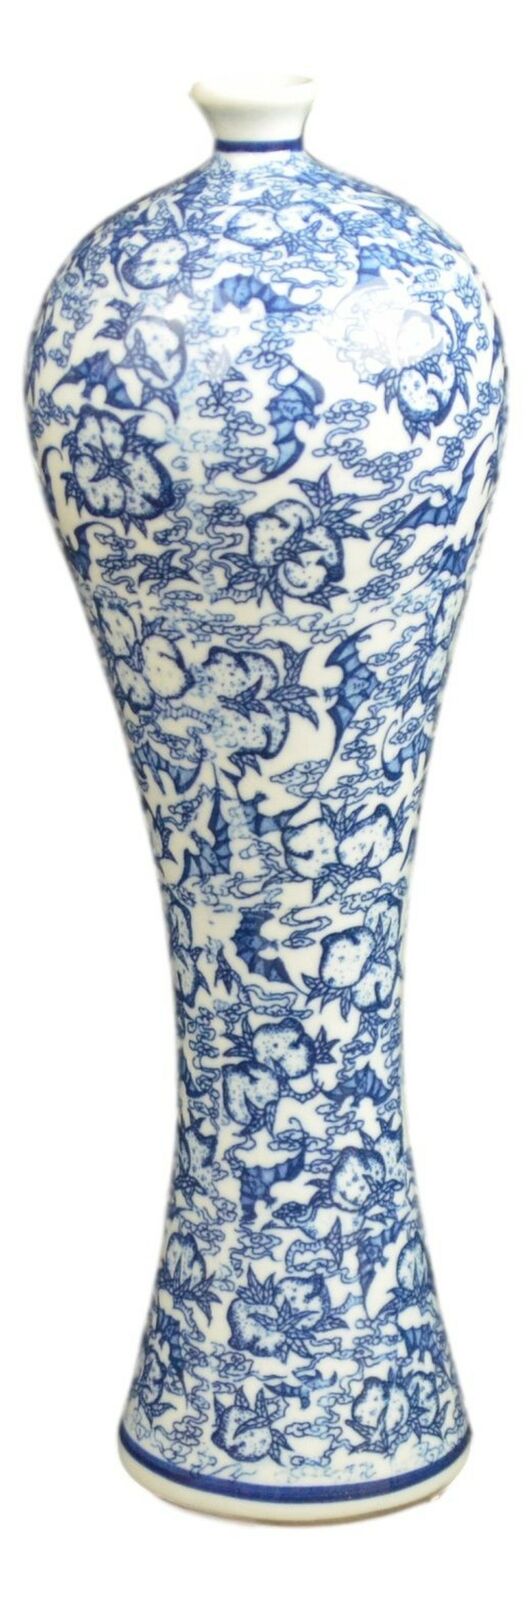 Blue and White Floral Porcelain Vase, China Vase, Decorative Vase, Jingdezhen...